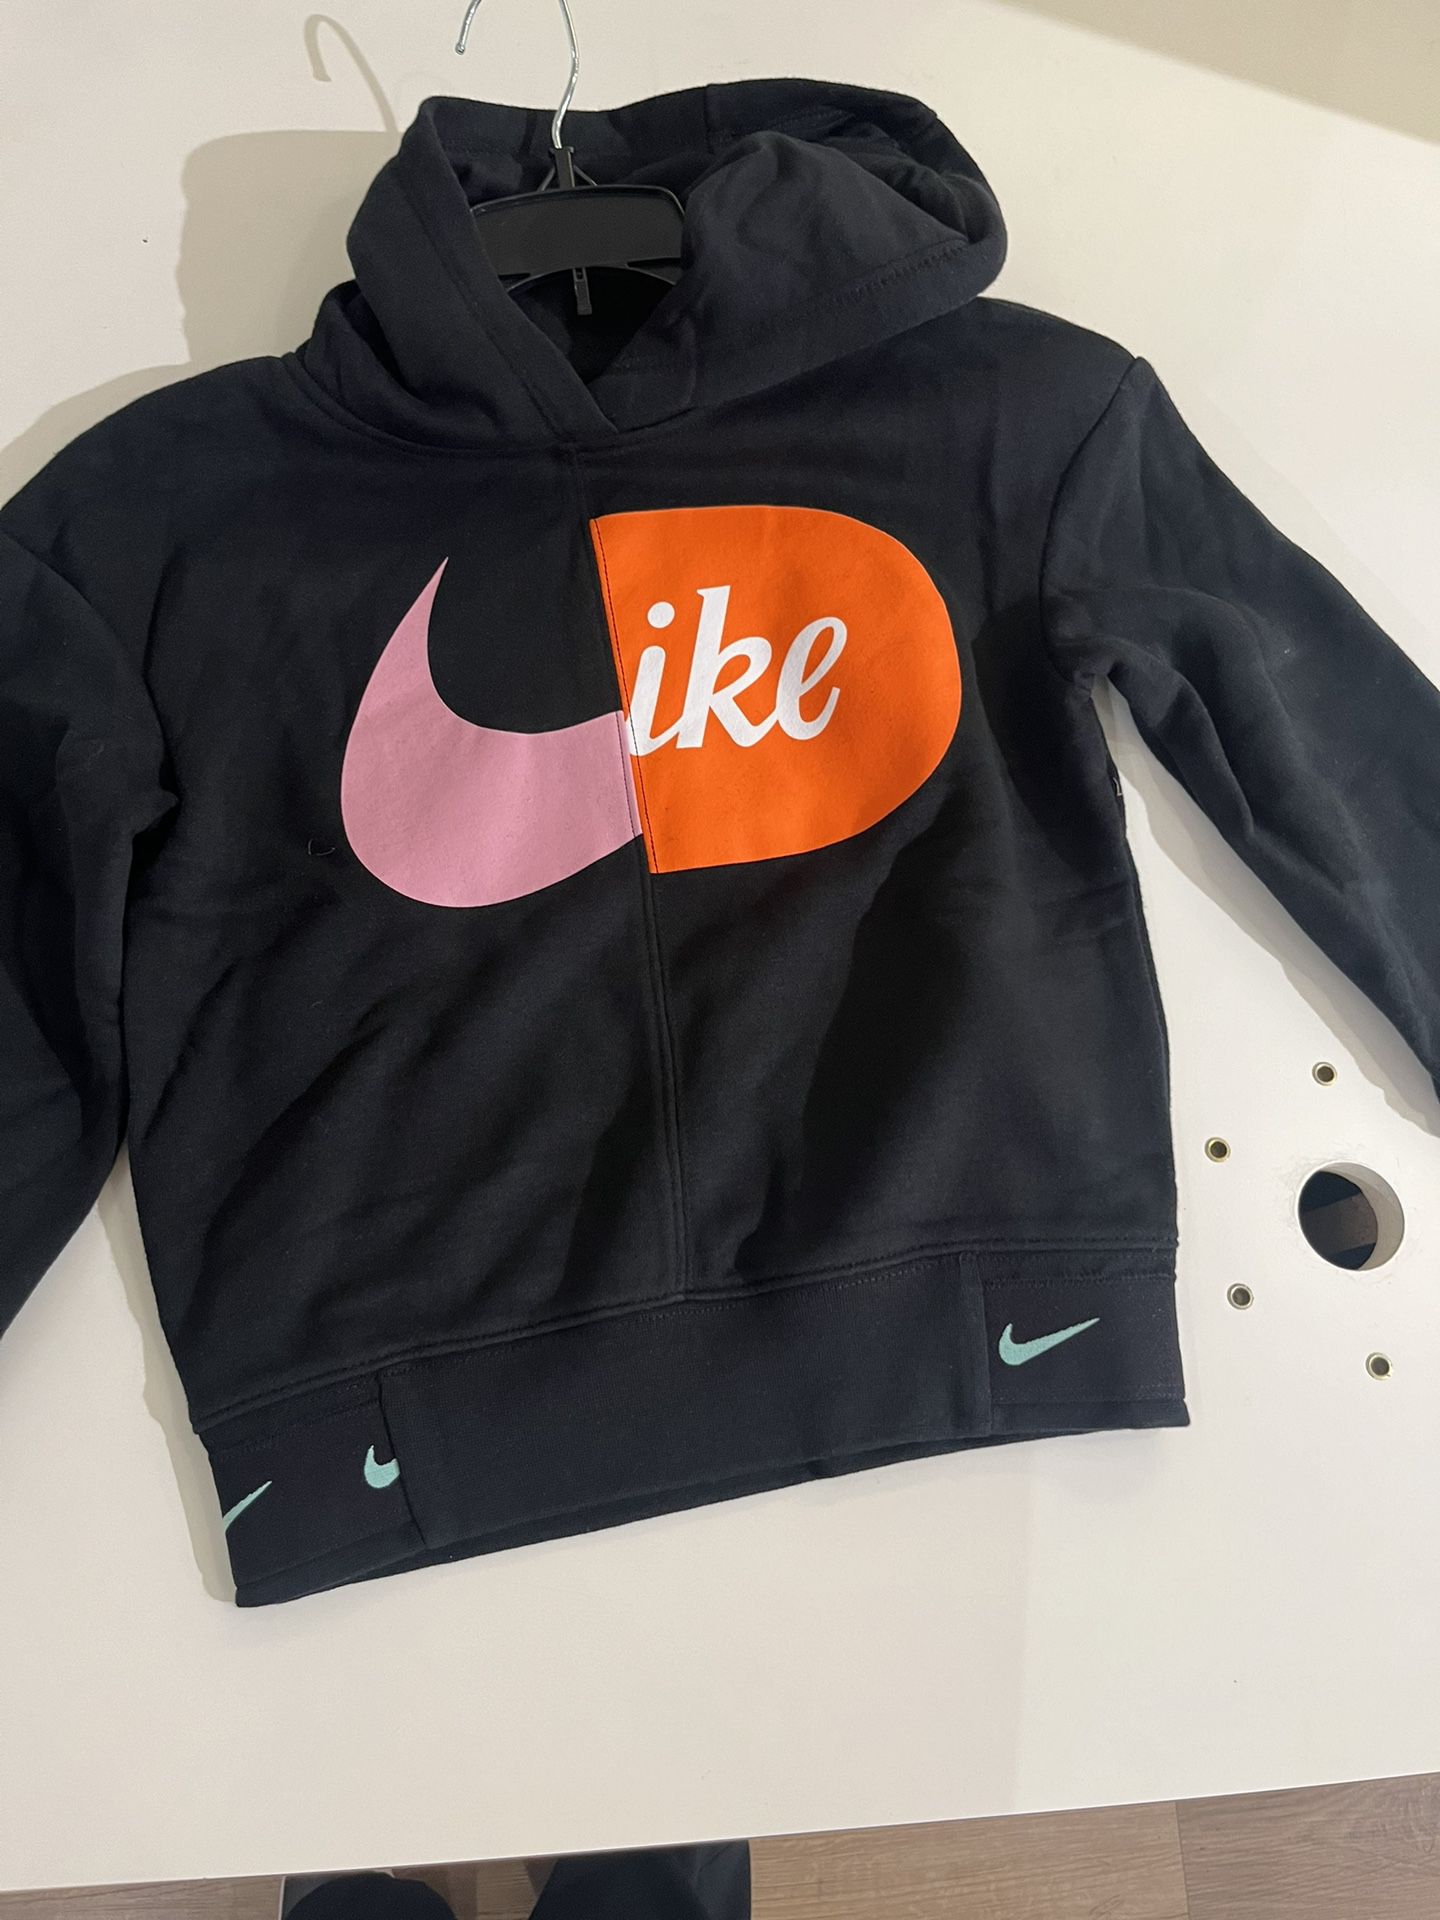 Nike Little Just Do It Fleece Girls Active Hoodies Size 6X, Color: Black/Pink/Orange